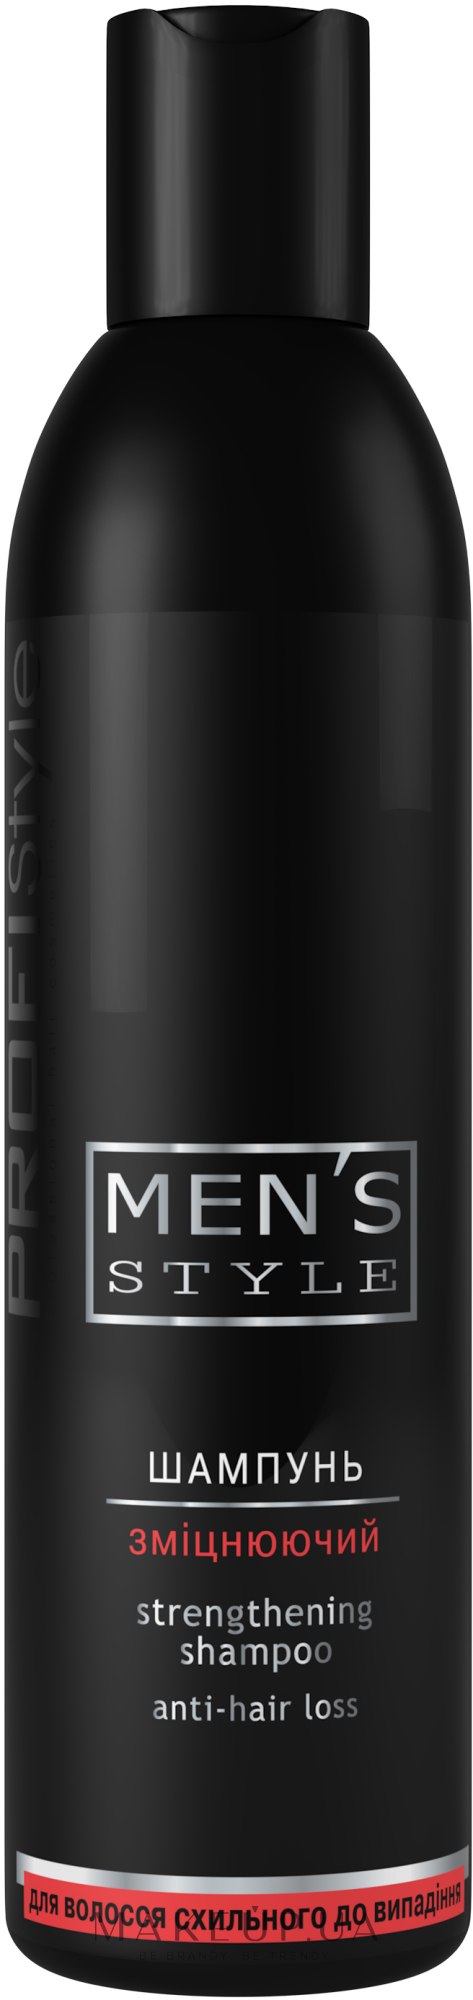 Шампунь укрепляющий для мужчин - Profi Style Men's Style Strengthening Shampoo  — фото 250ml